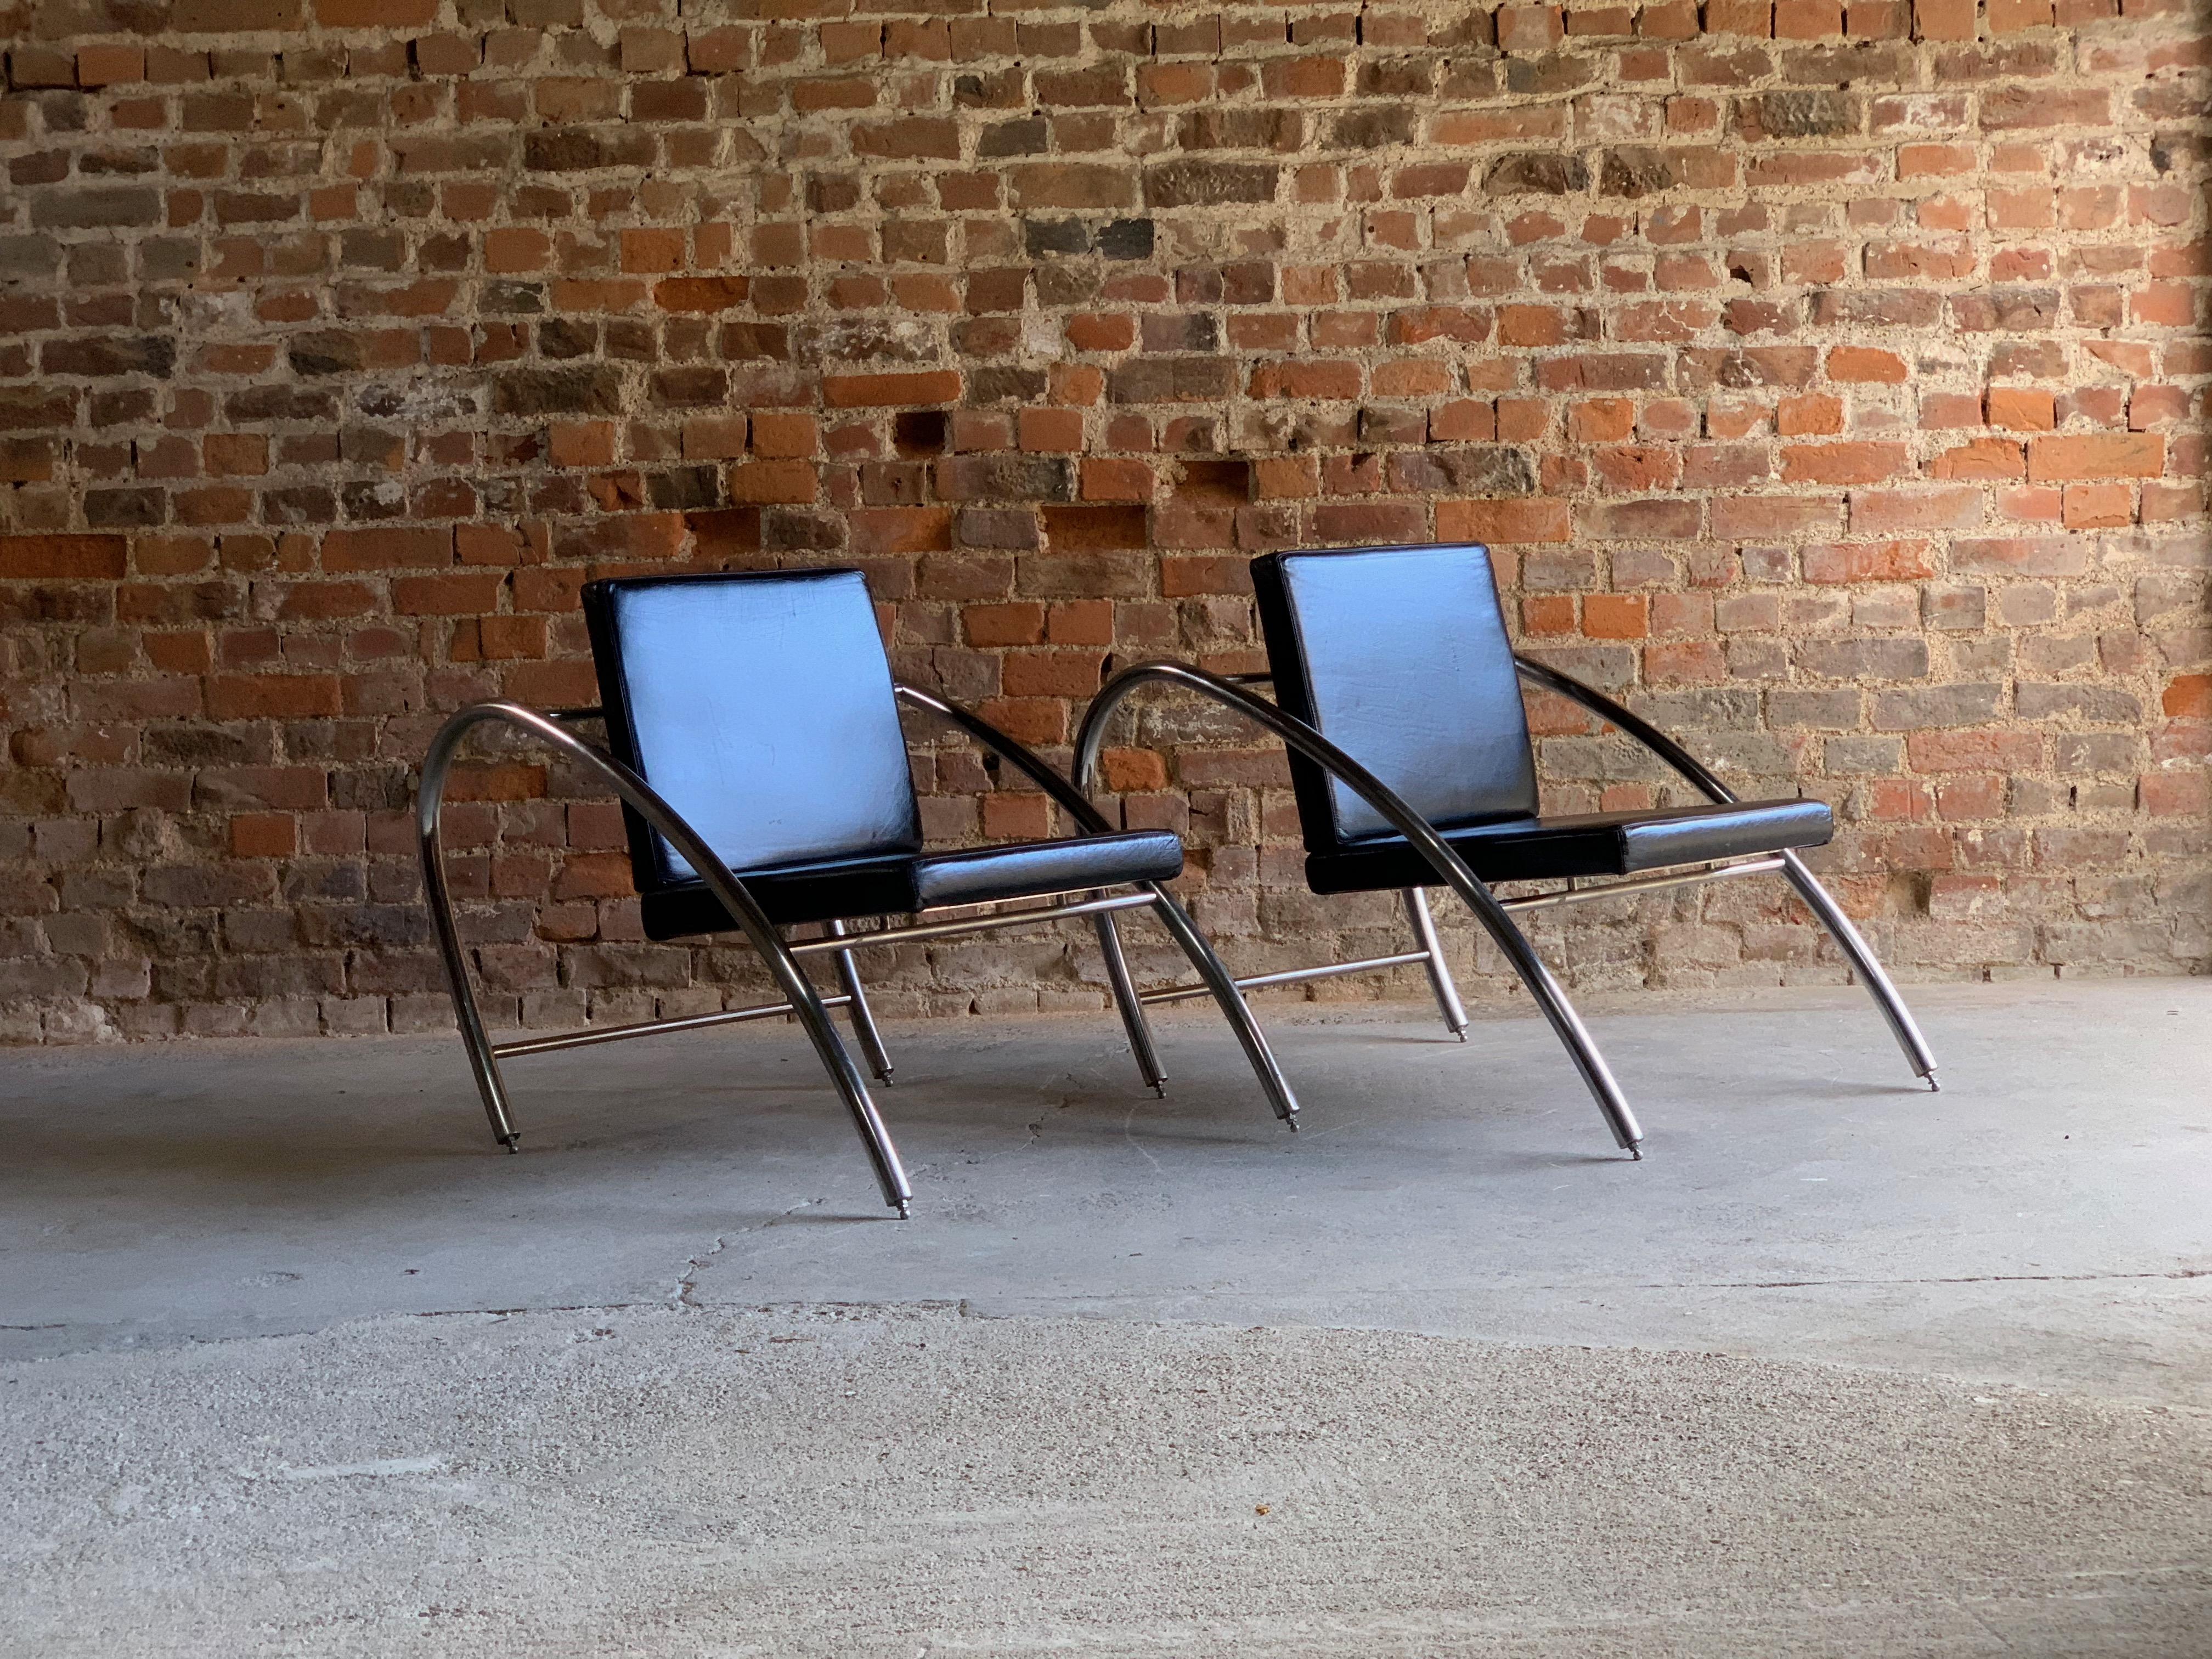 Italian Moreno Chrome & Leather Lounge Chairs by Francois Scali & Alain Domingo for Nemo